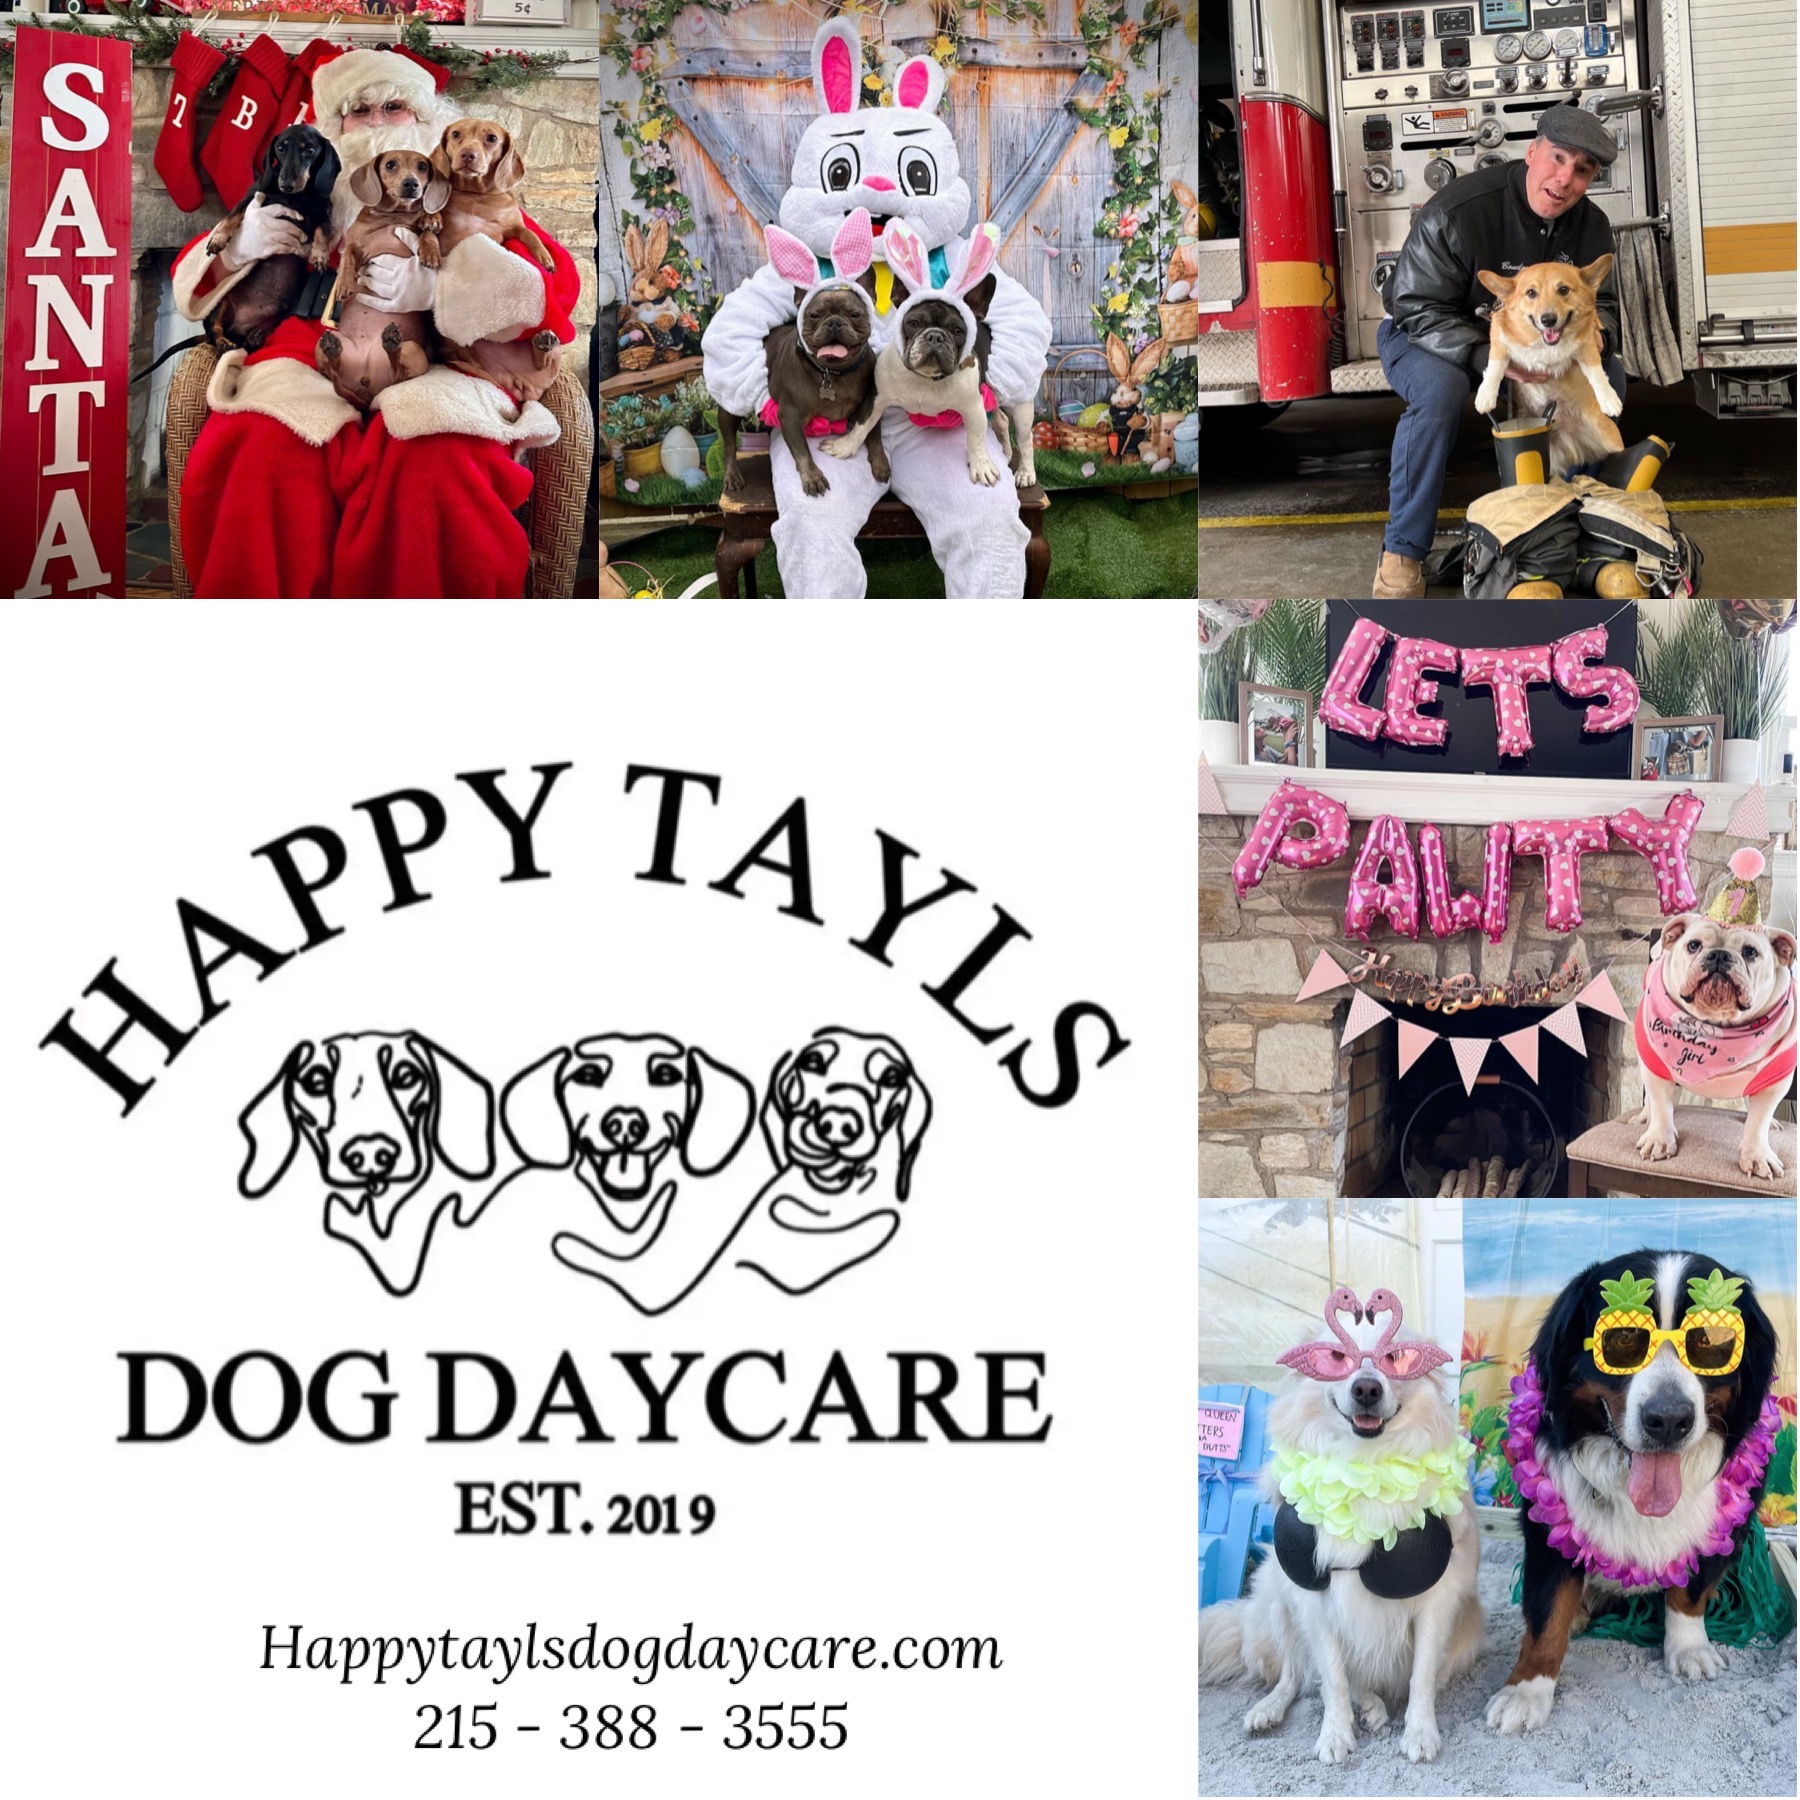 Happy Tayls Dog Daycare